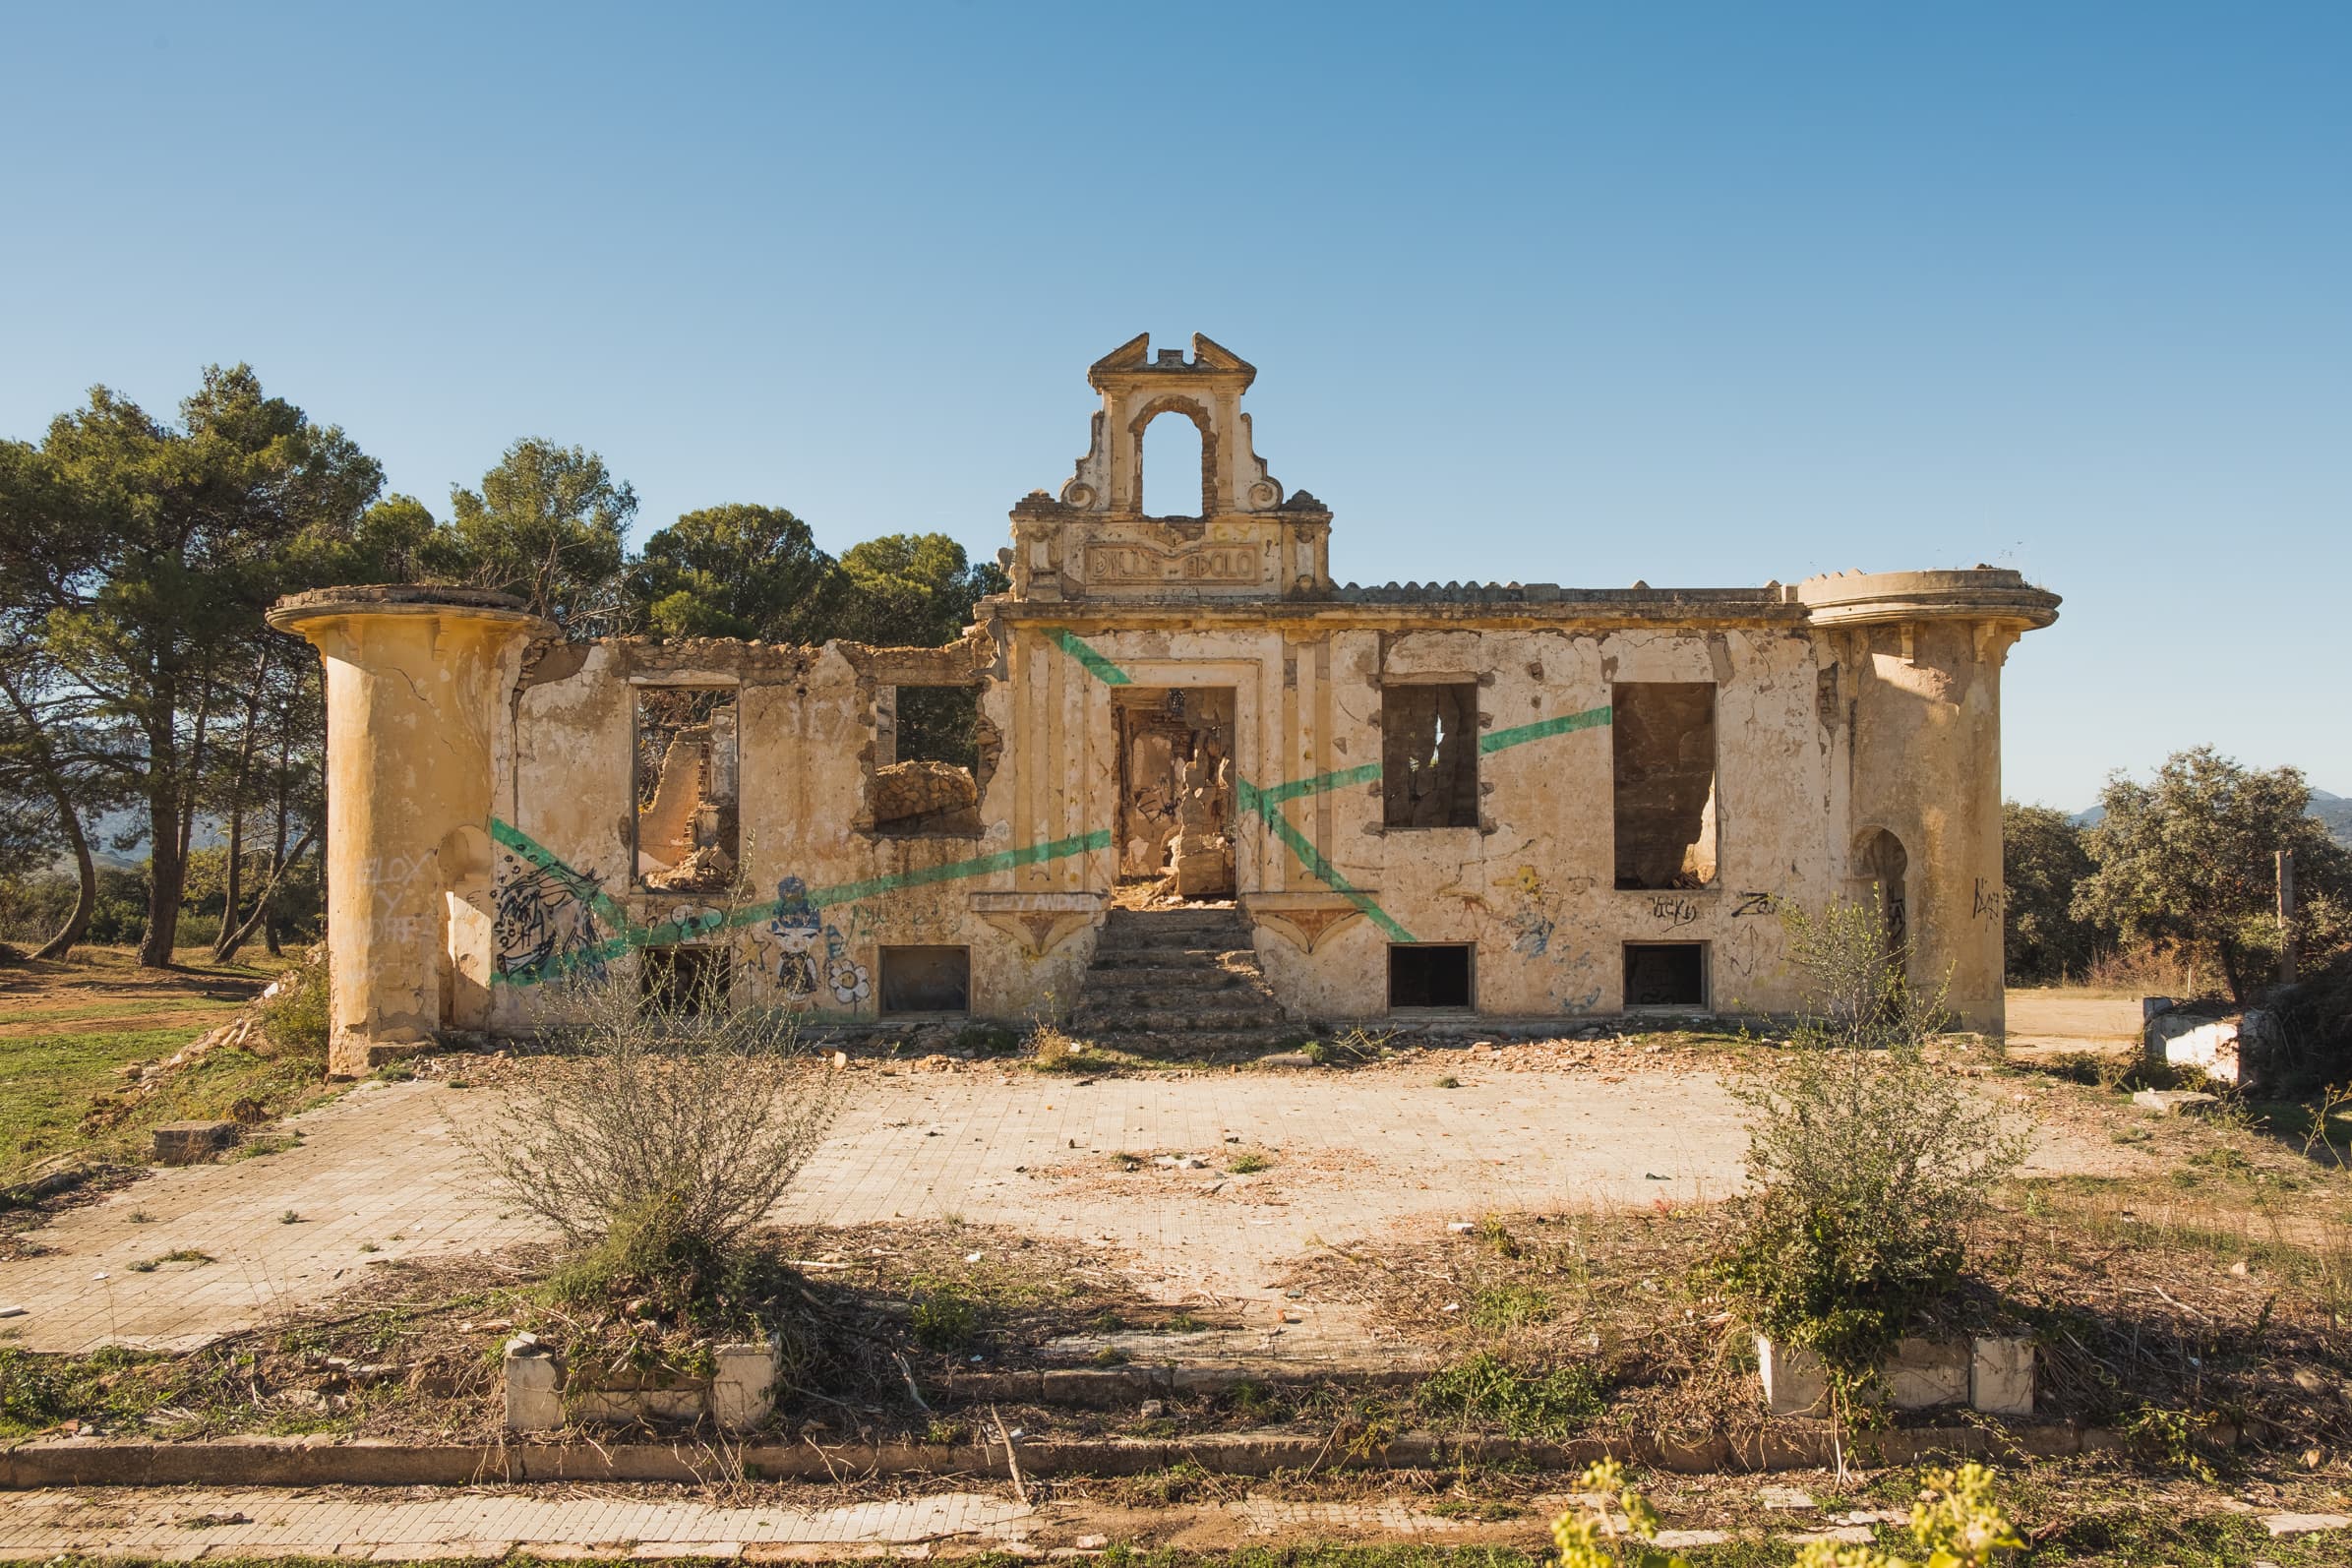 Abandoned and decrepit Villa Apolo near Ronda, Spain